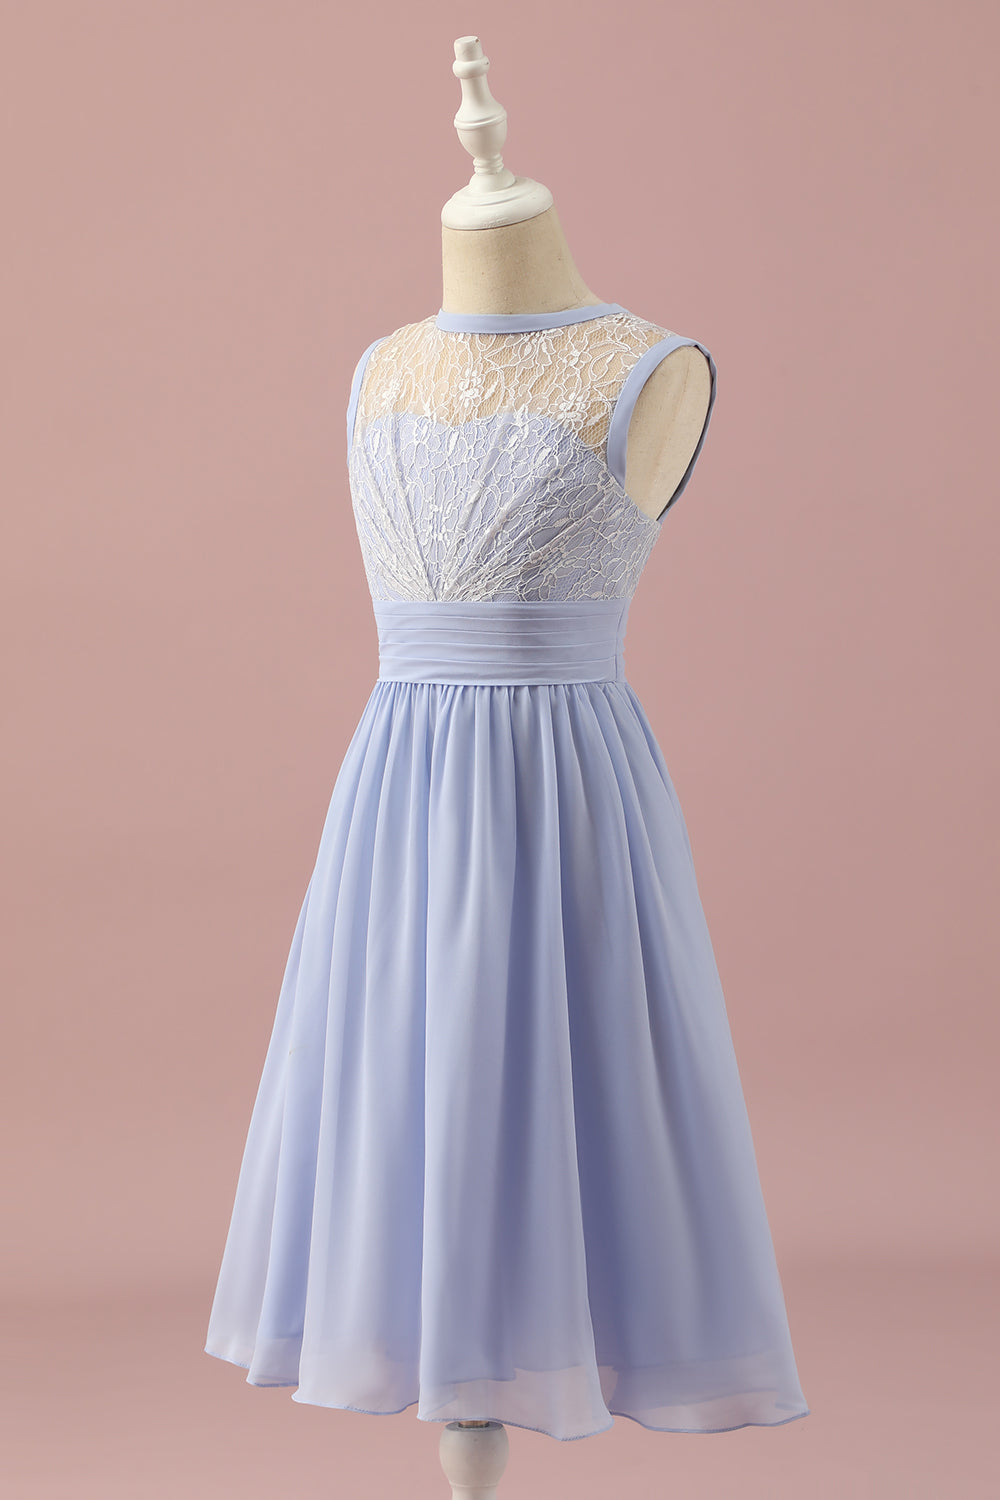 Lavender A Line Lace and Chiffon Short Junior Bridesmaid Dress